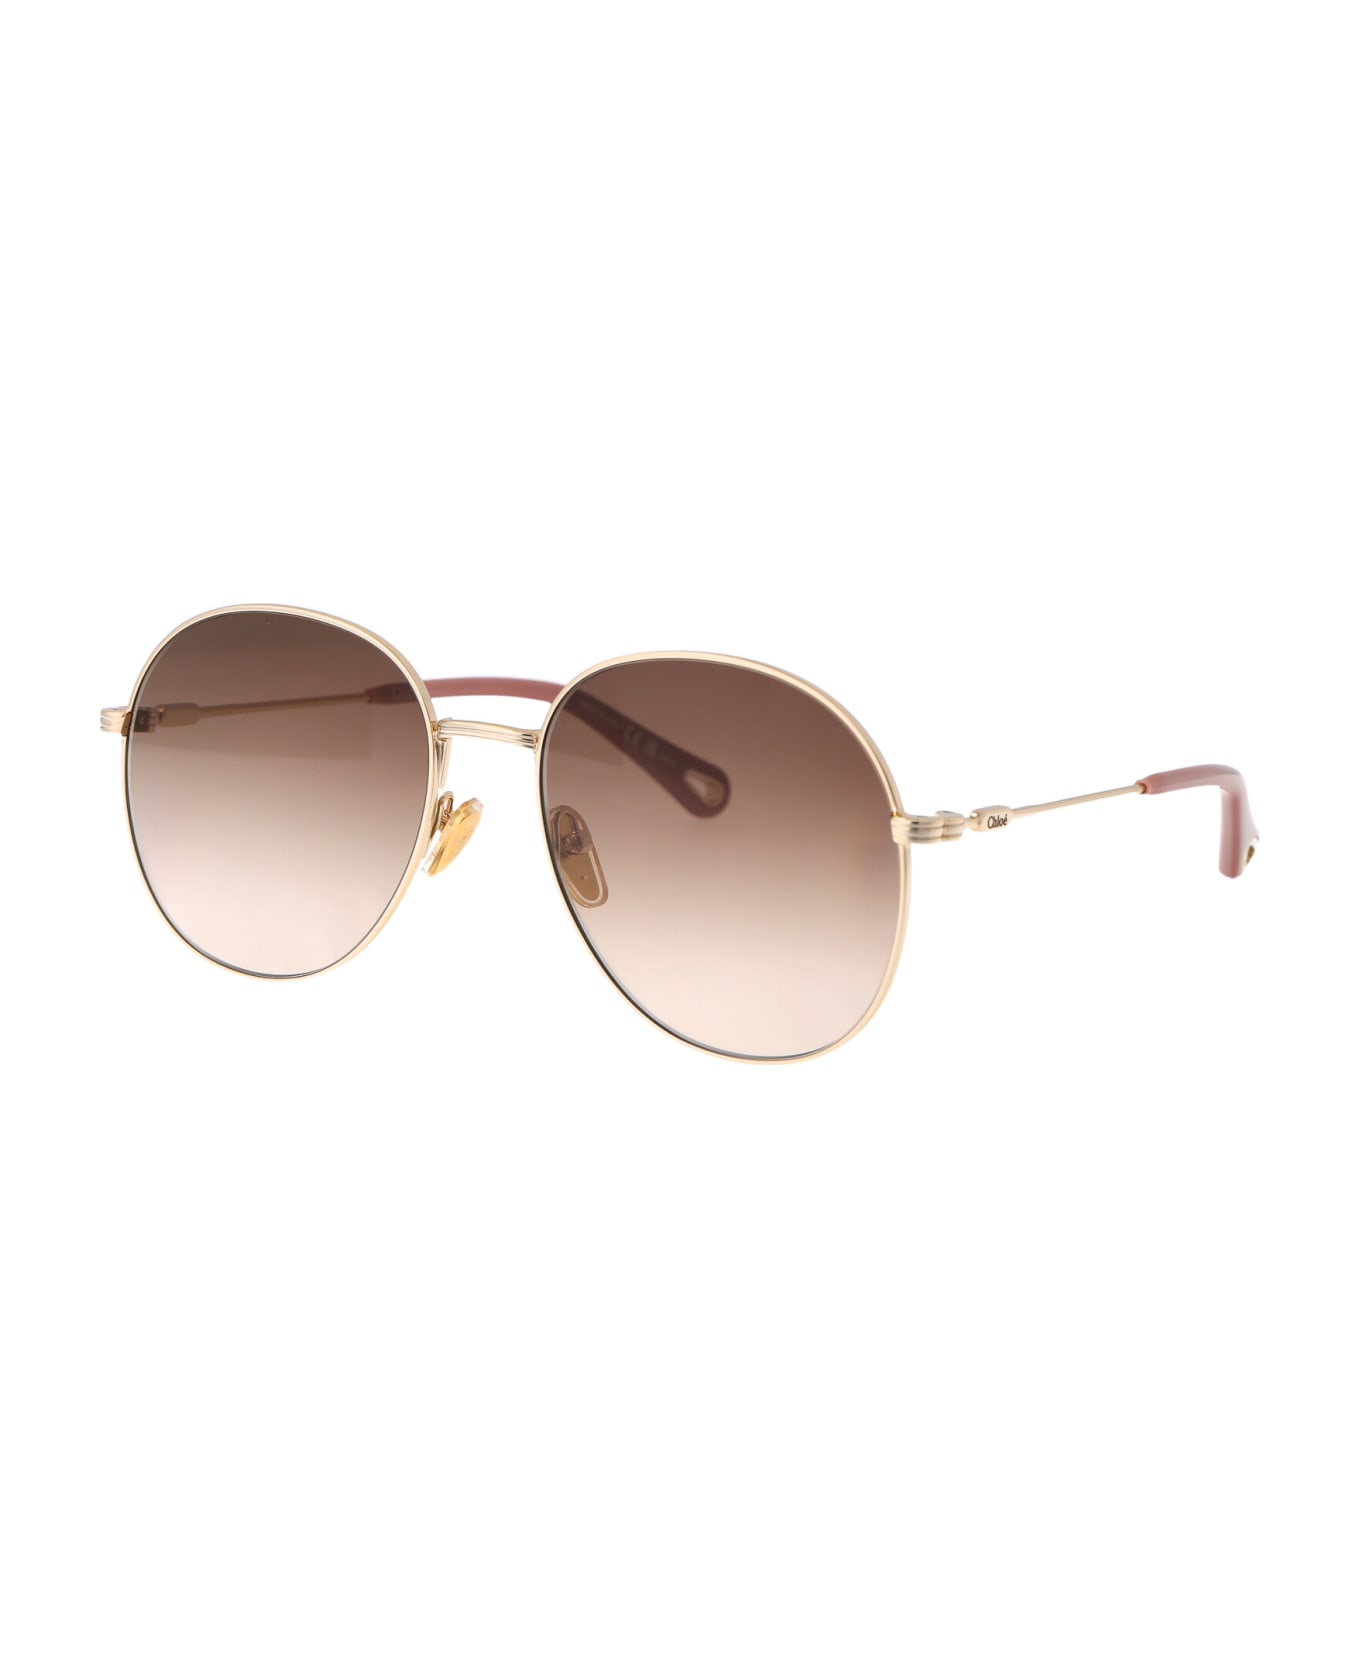 Chloé Eyewear Ch0178s Sunglasses - 002 GOLD GOLD BROWN